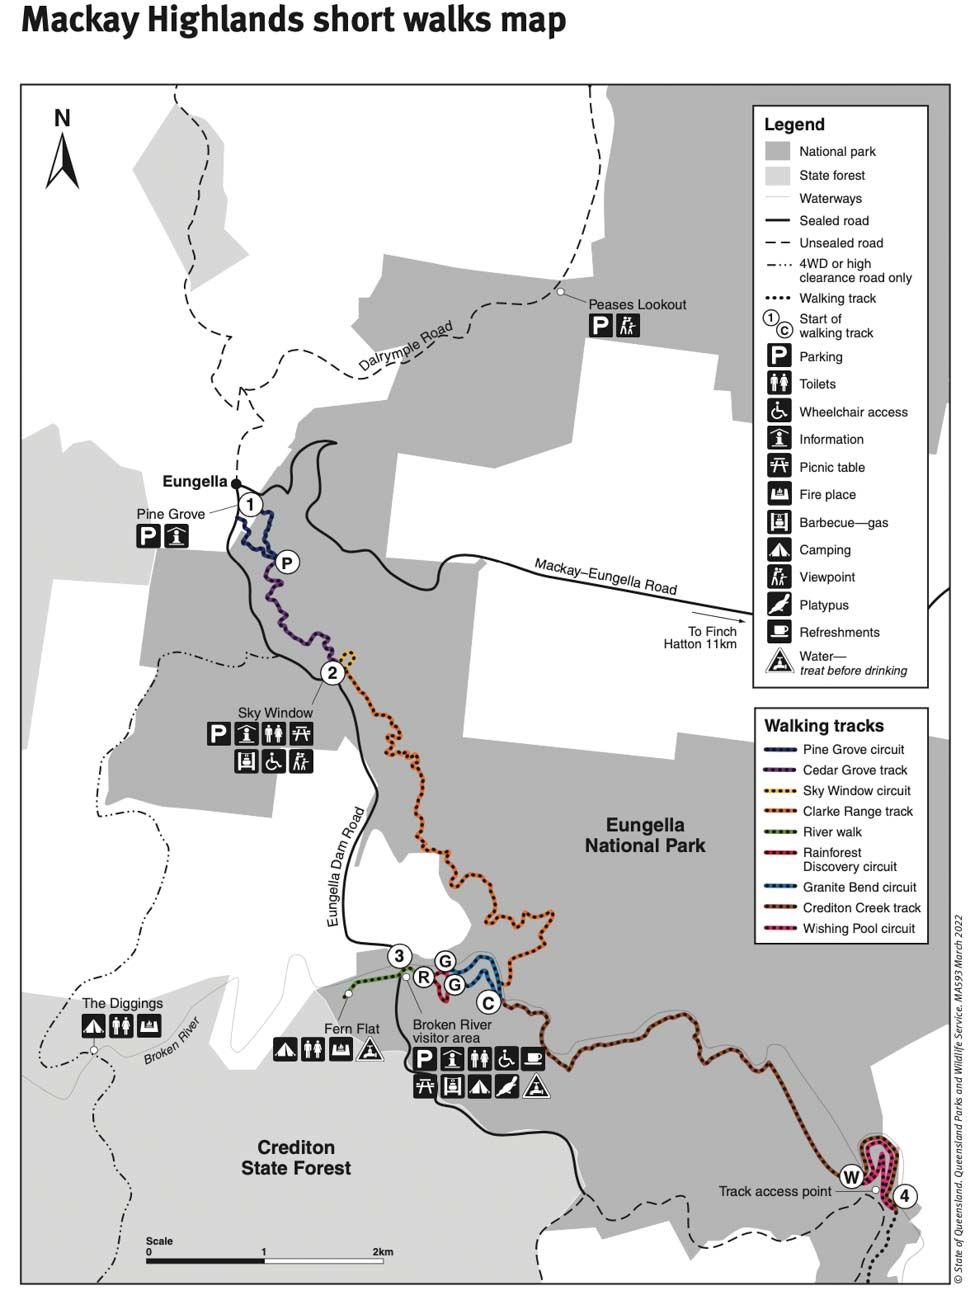 Eungella National Park short walks map - Queensland Parks and Wildlife Service